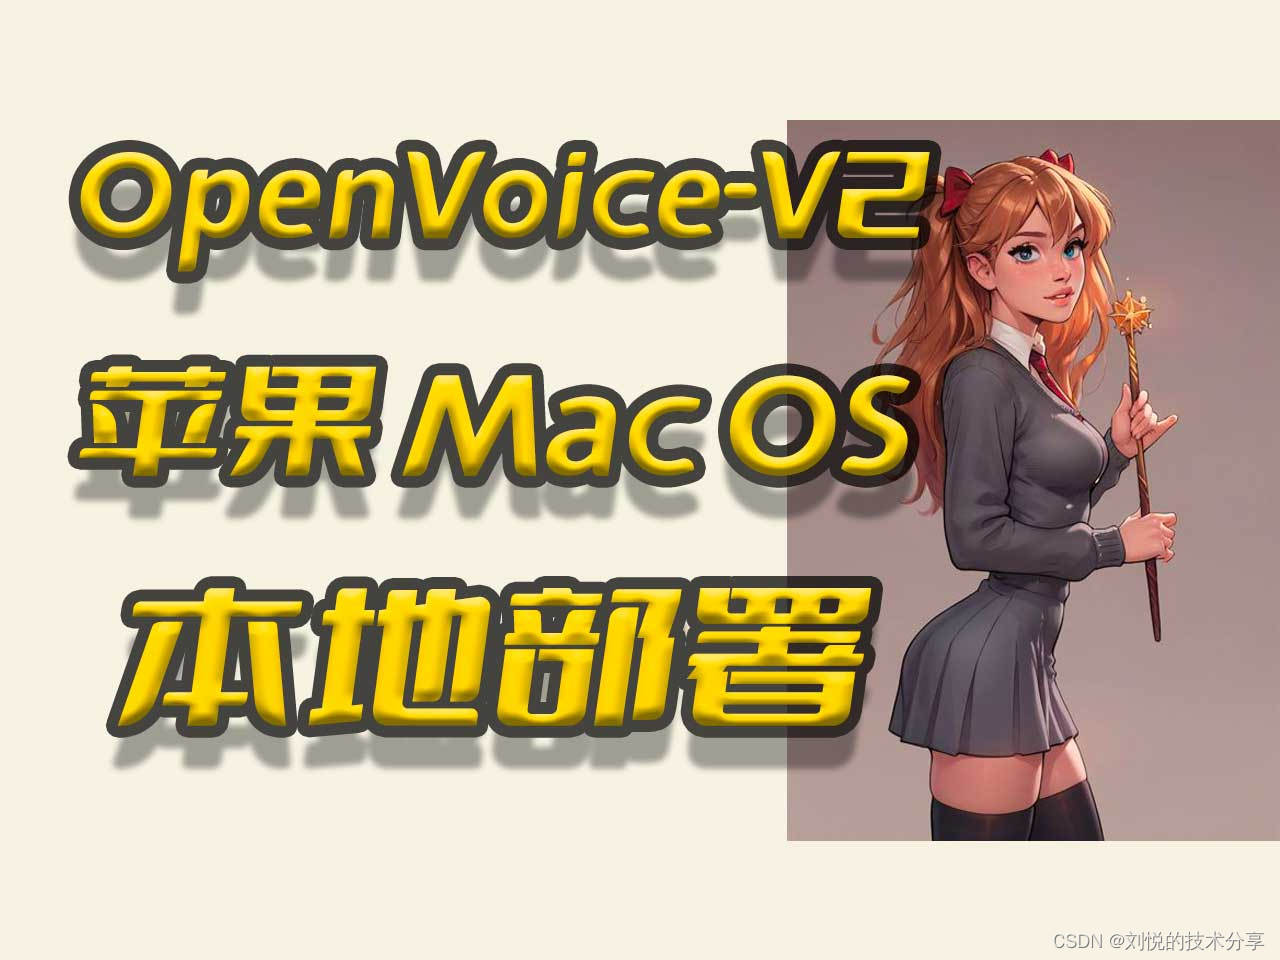 OpenVoiceV2本地部署教程,苹果MacOs部署流程,声音响度统一,文字转语音,TTS